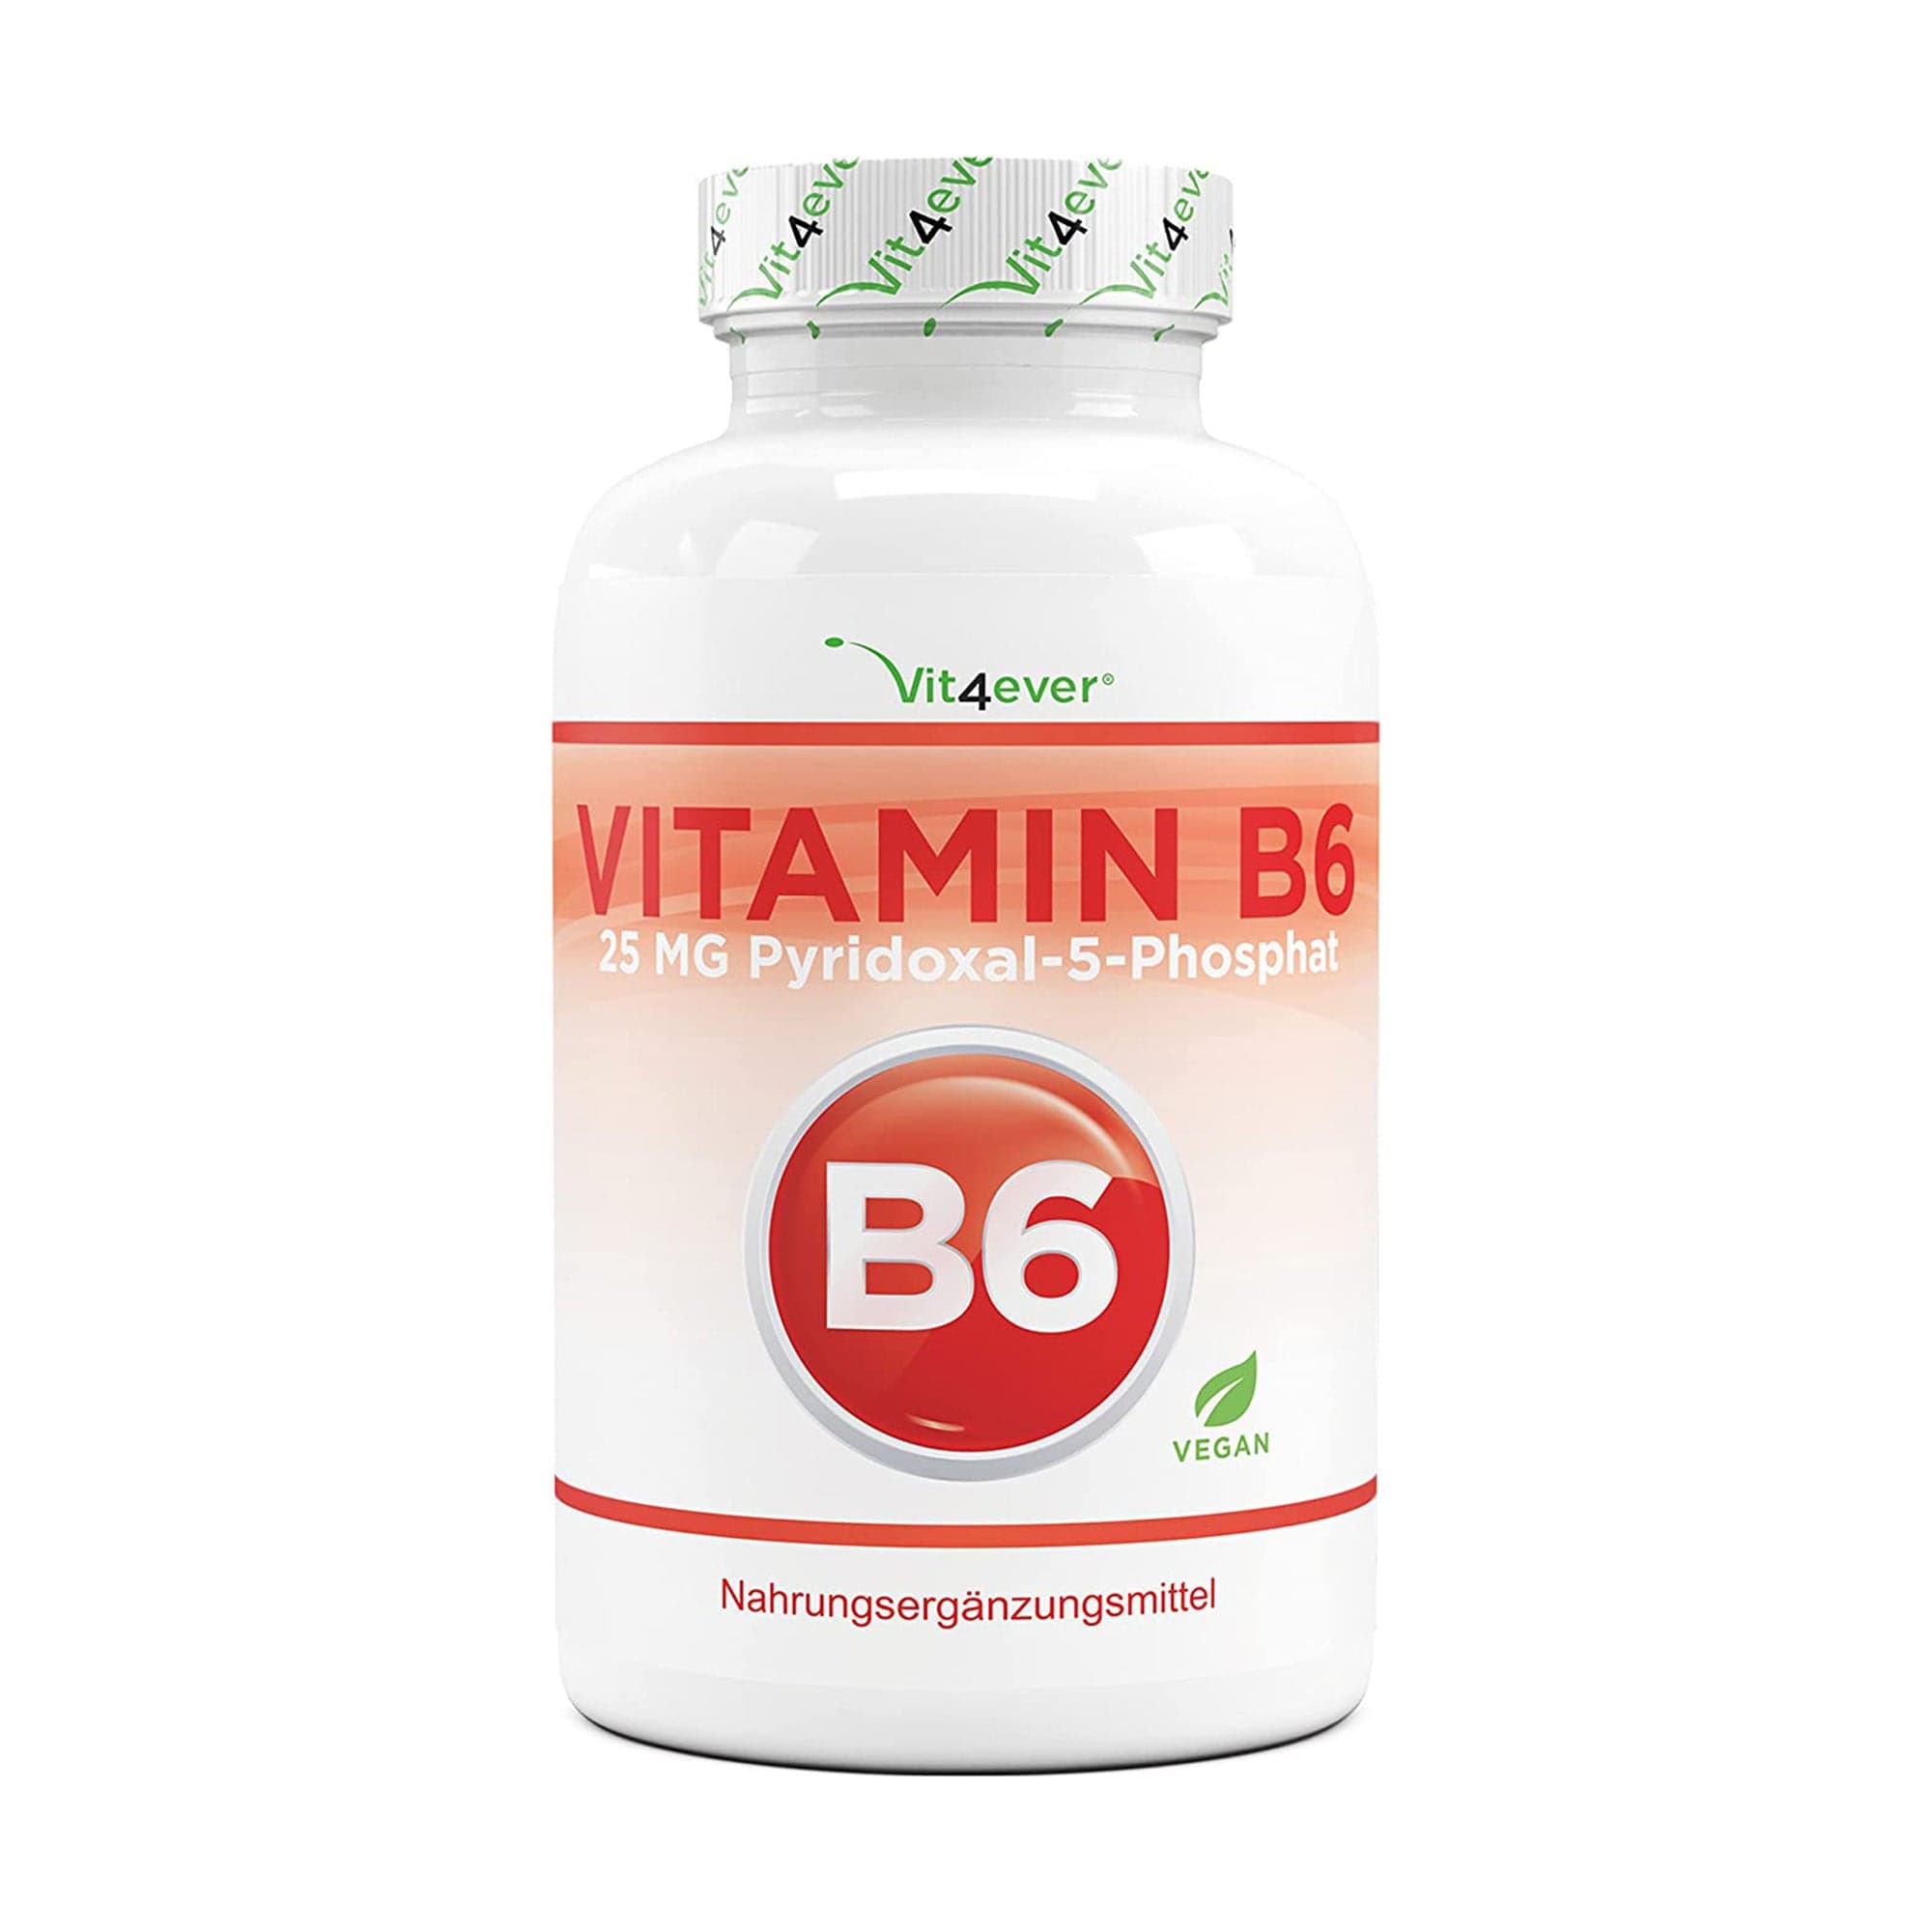 Vit4ever Vitamine B6 